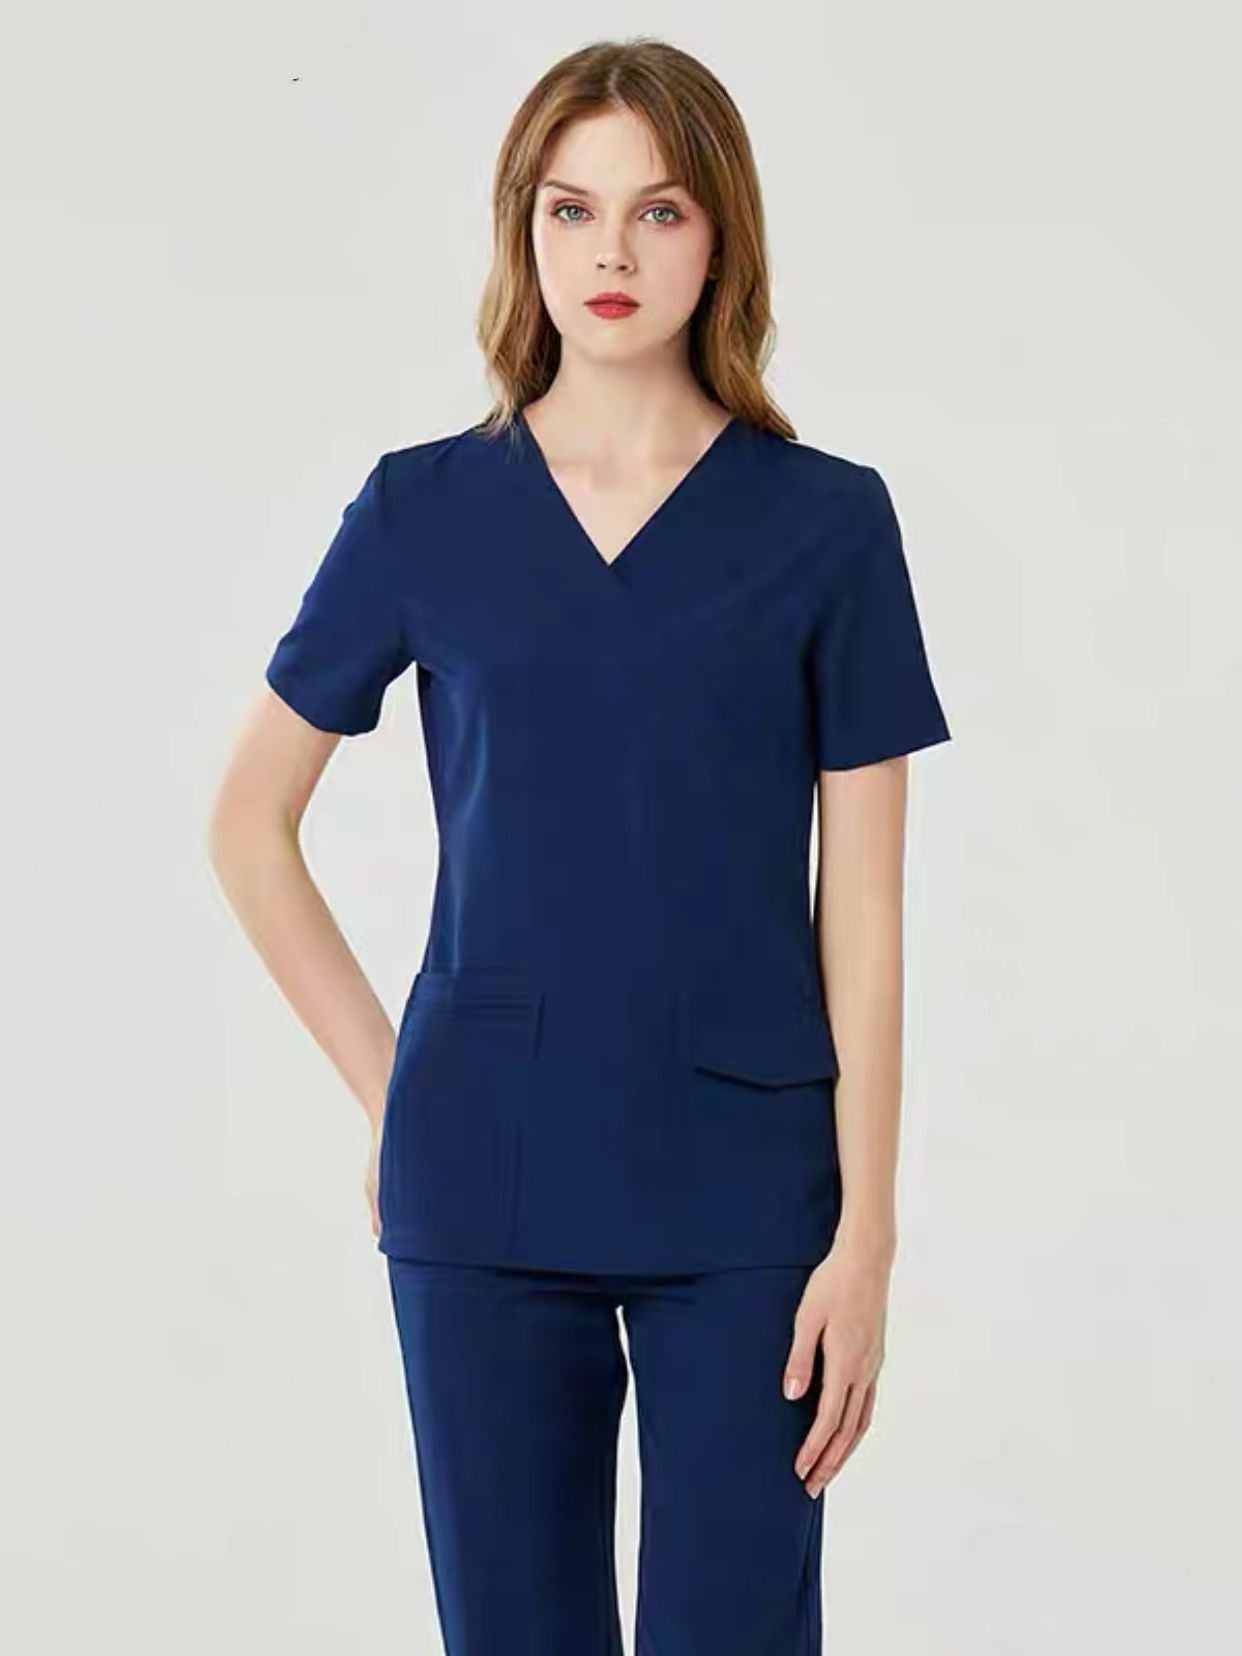 Surgical Scrubs Clothing Short Sleeve Set